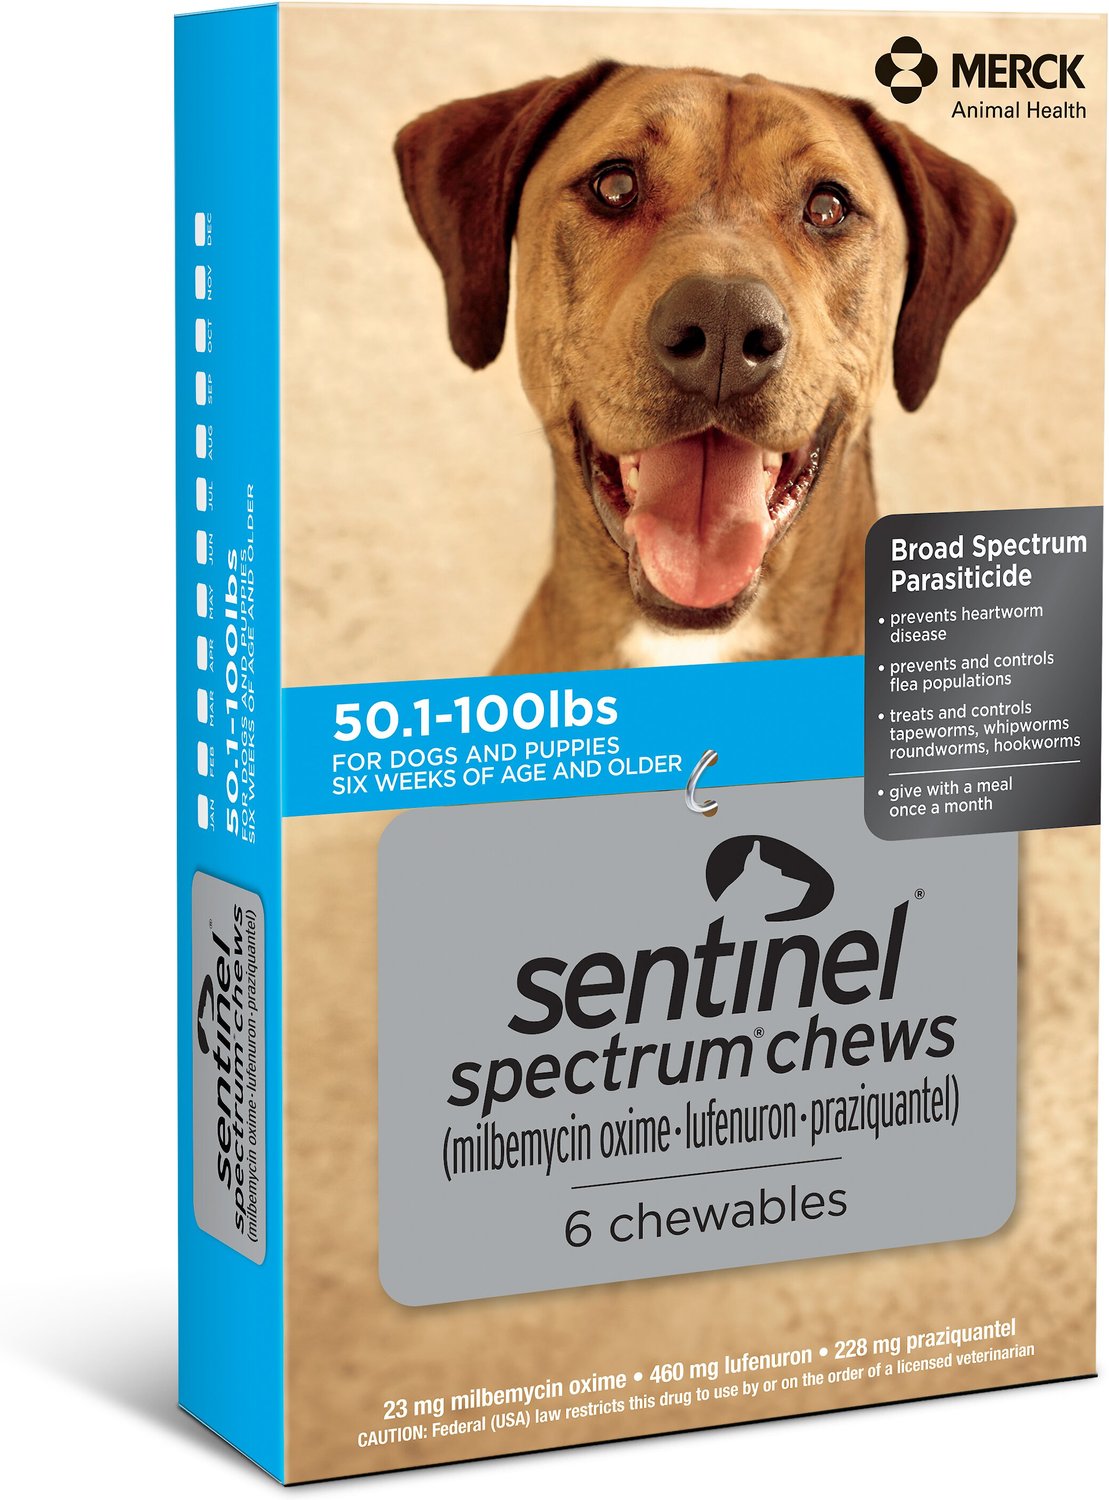 Sentinel Spectrum Chews Rebate